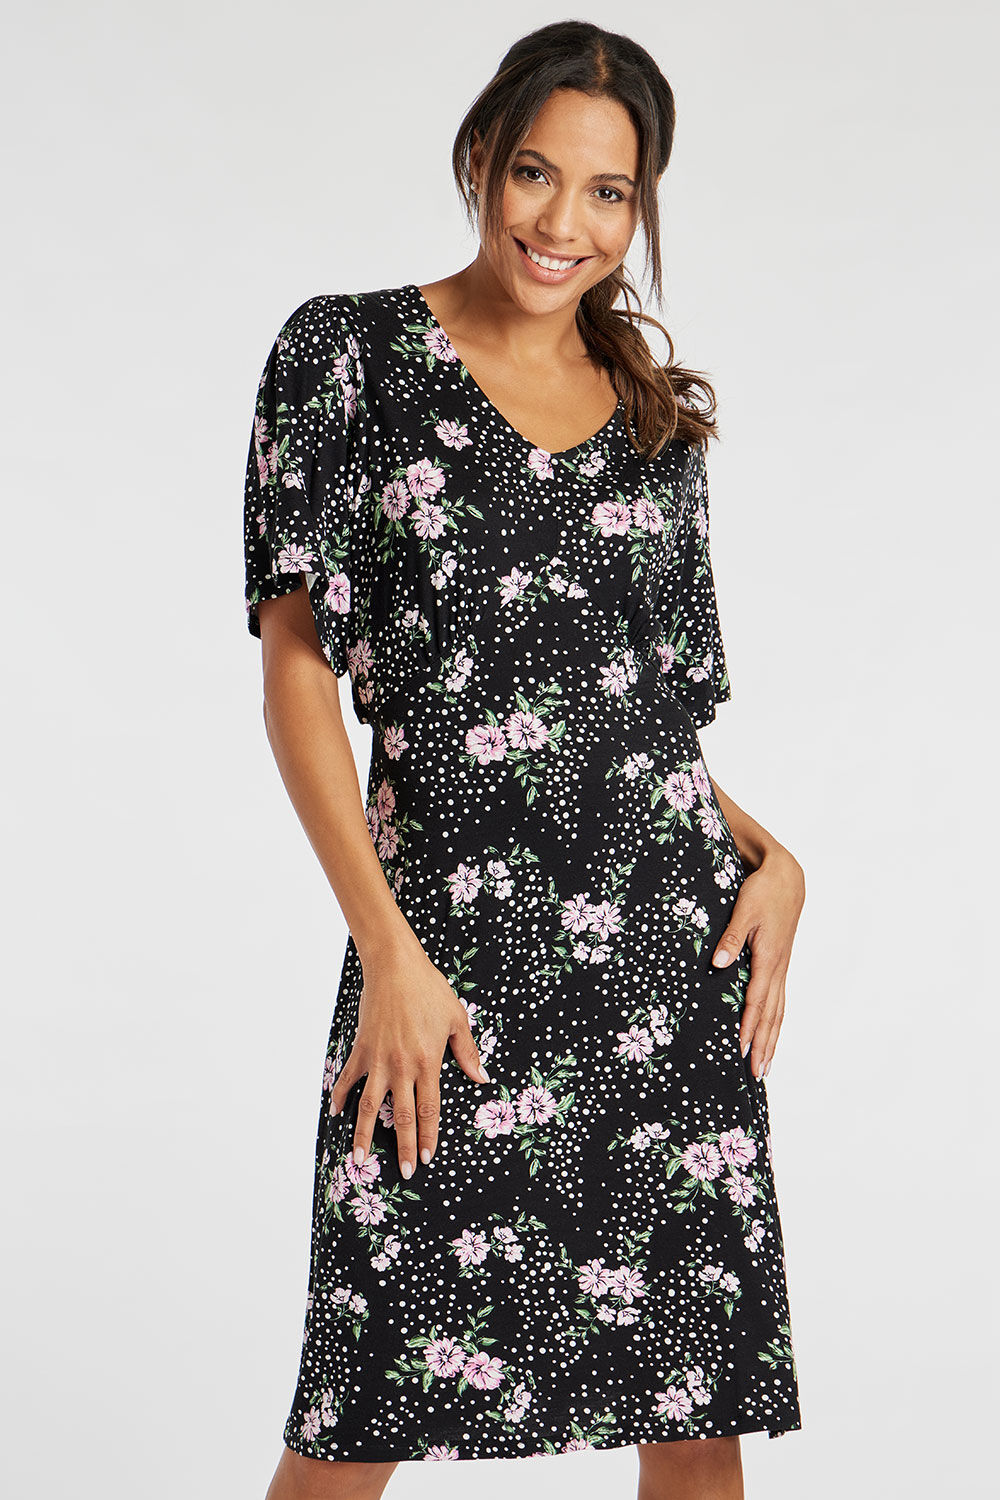 Bonmarche Black Floral Spot Print Jersey Tea Dress, Size: 14